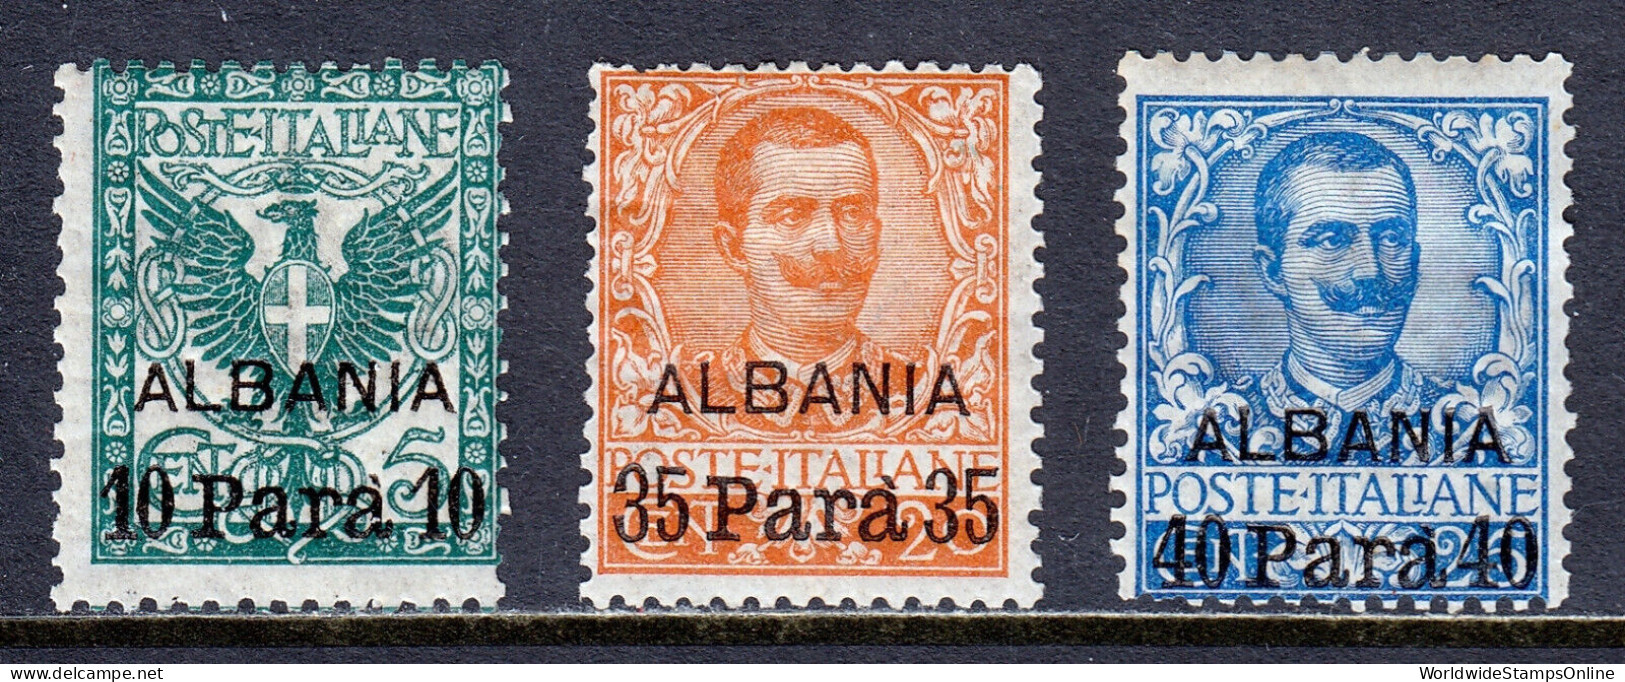 ITALY (OFFICES IN ALBANIA) — SCOTT 1-3 — 1903 OVERPRINT SET — MH — SCV $26 - Albanie